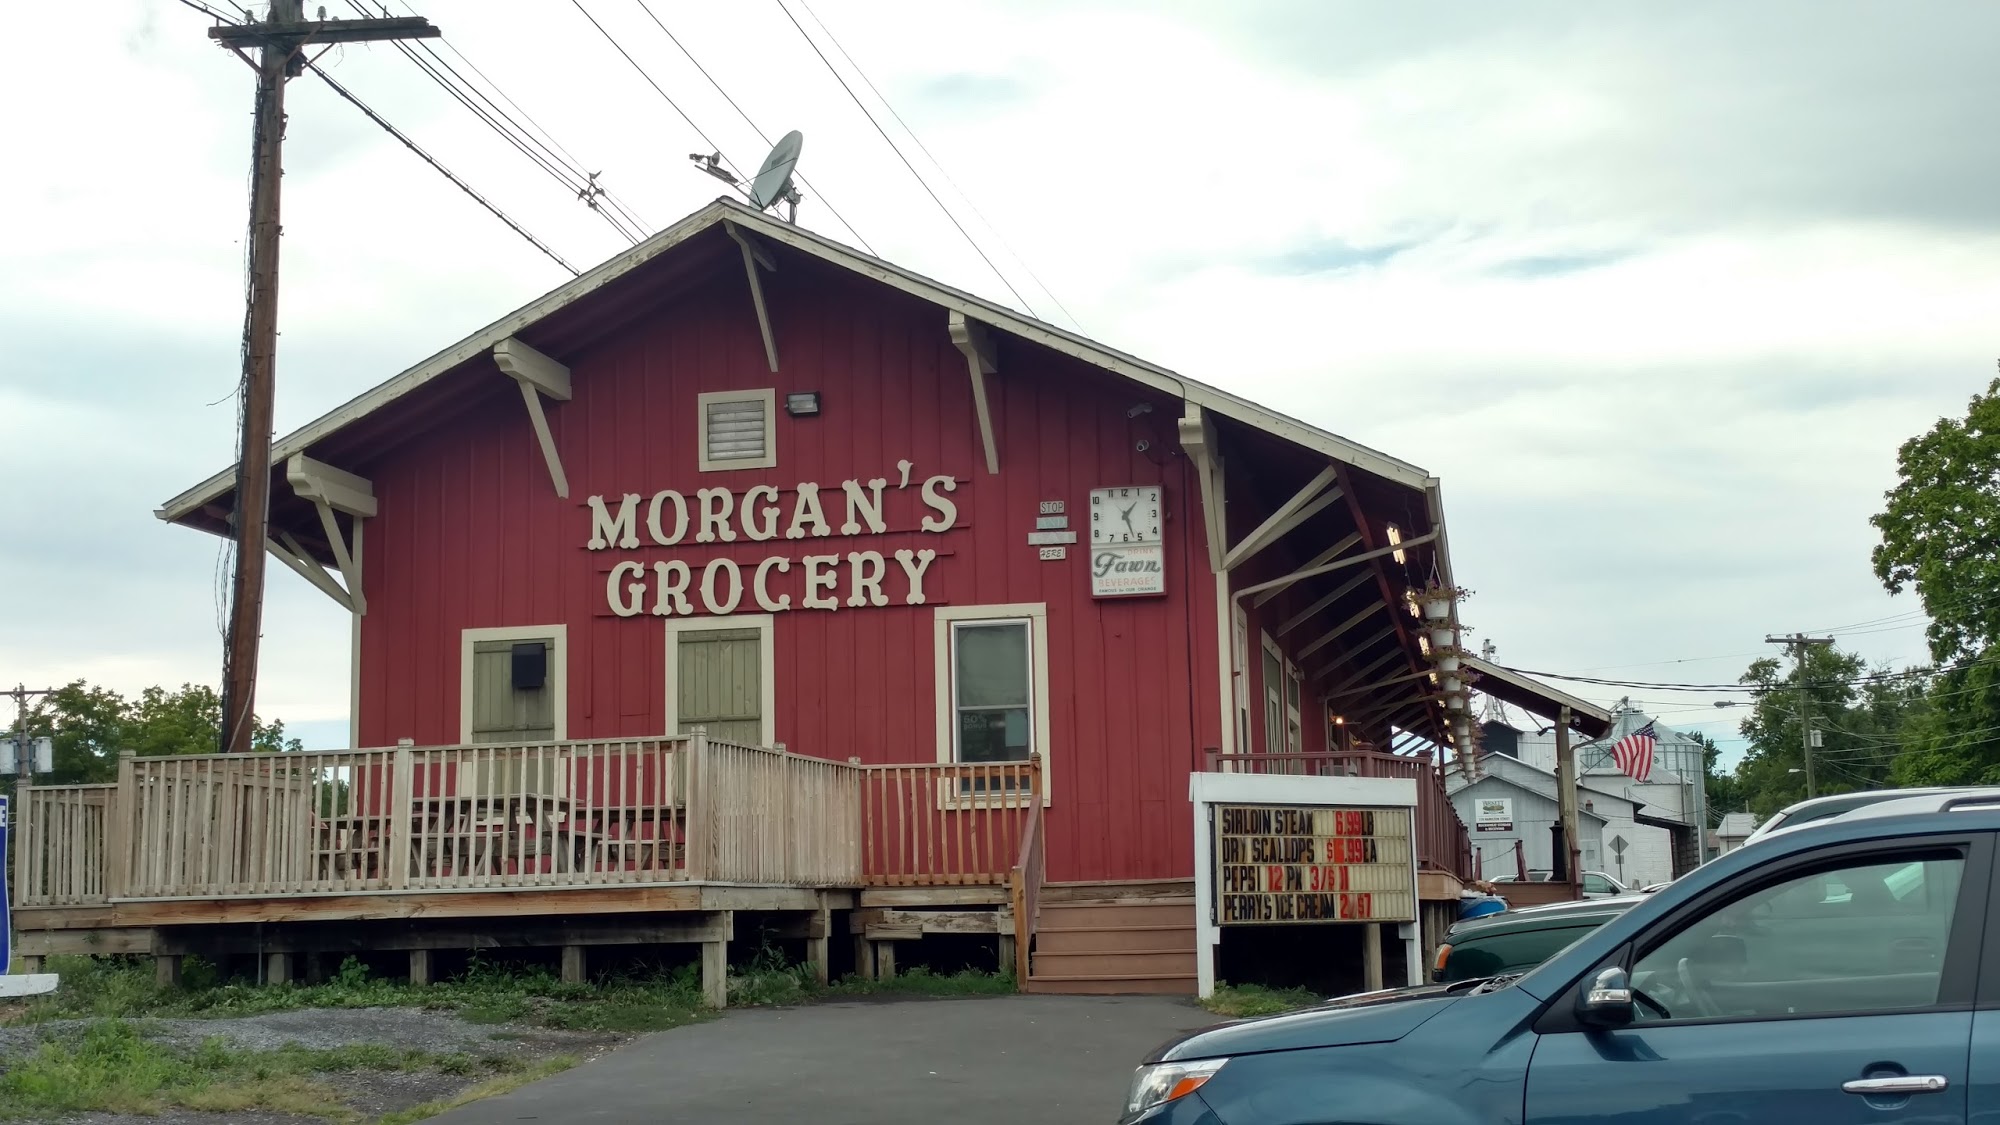 Morgan's Grocery